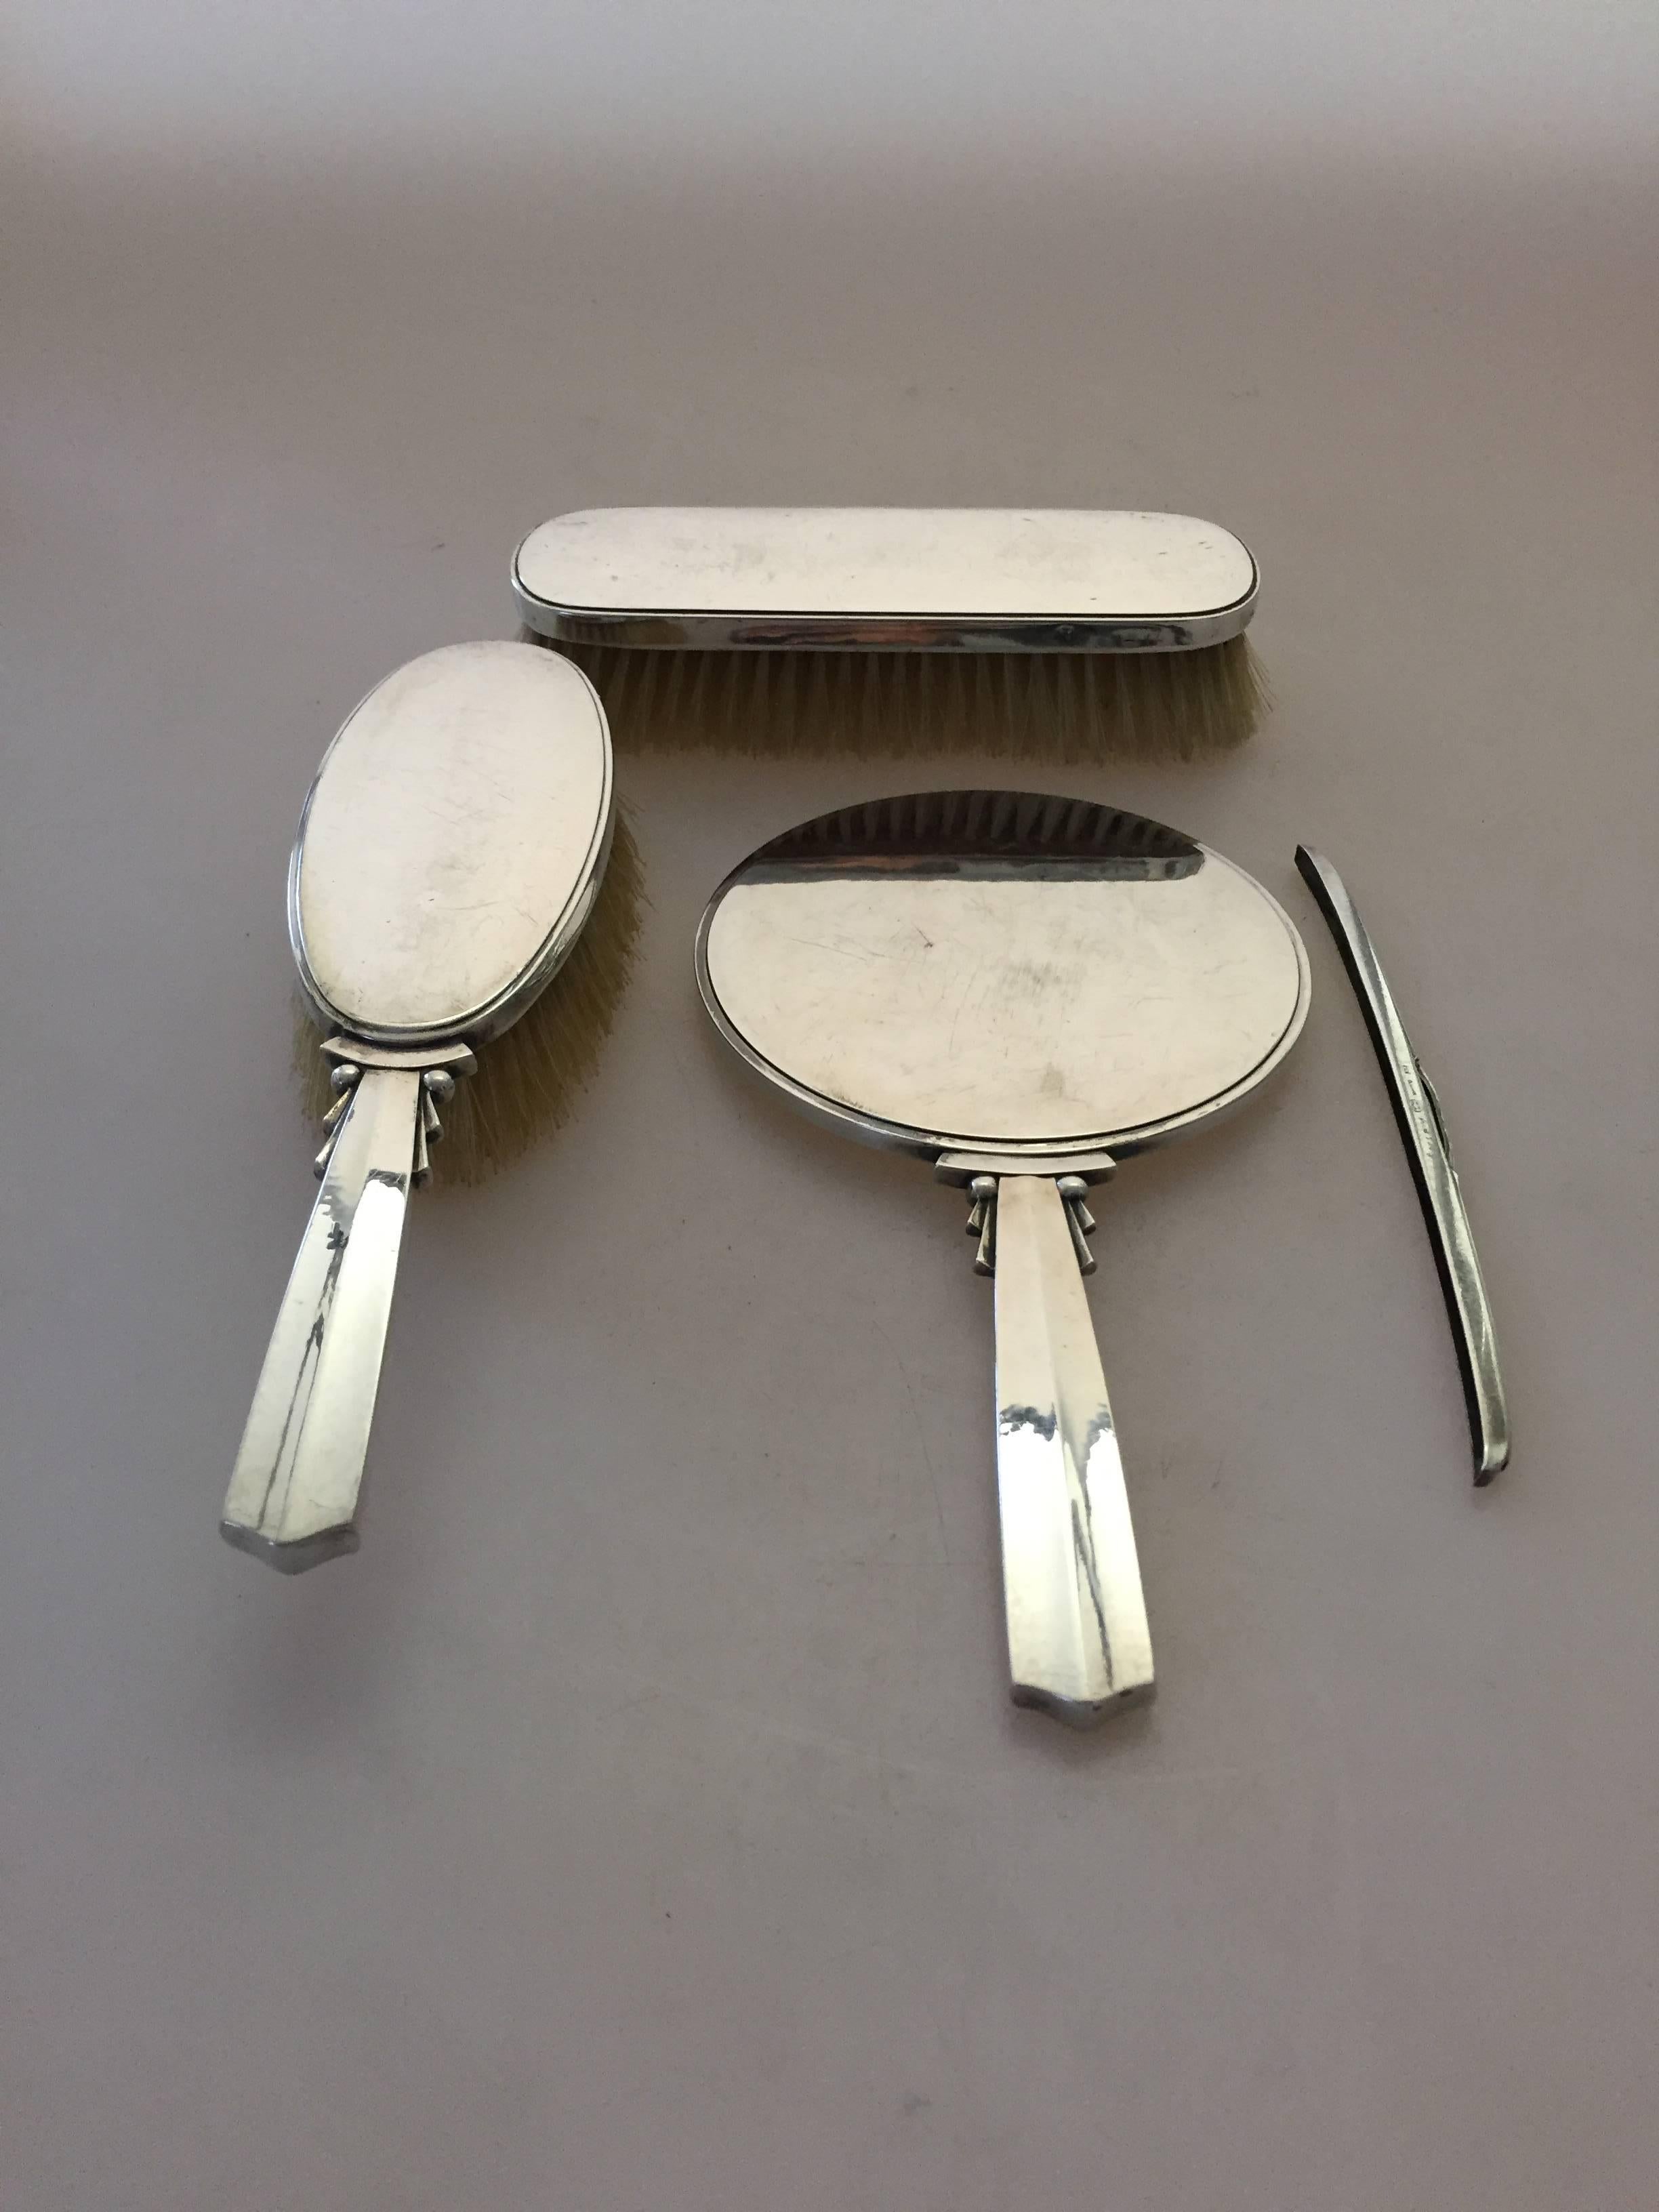 Georg Jensen sterling silver Harald Nielsen mirror, brush, handbrush and comb #134. All in good used condition. 

Mirror measures 23 cm L, brush 22.4 cm L, handbrush 17.2 cm L og cumb 16.7 L cm.